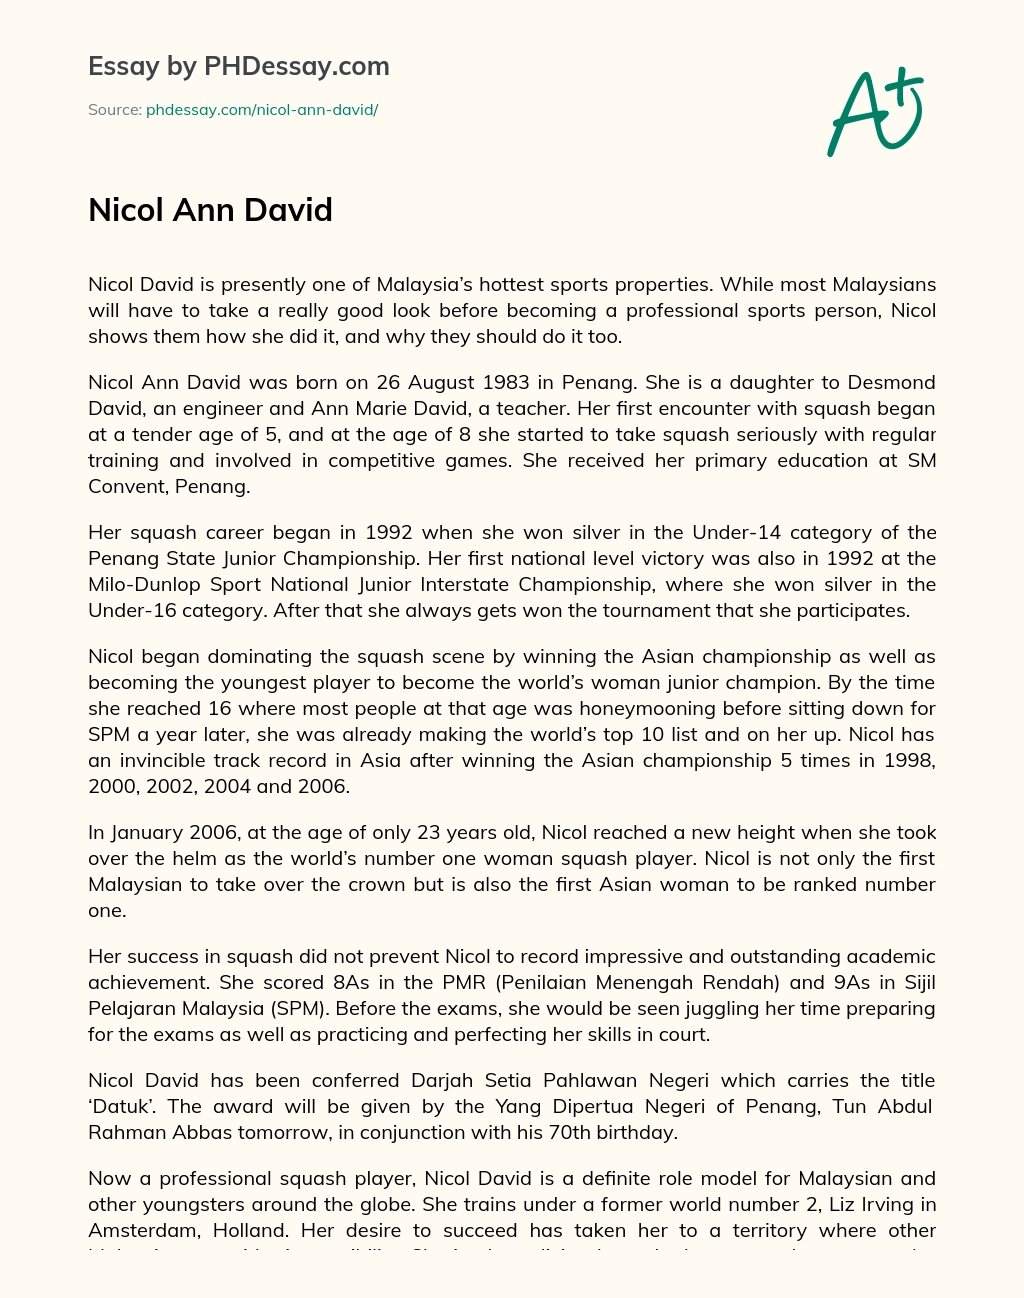 Nicol Ann David essay